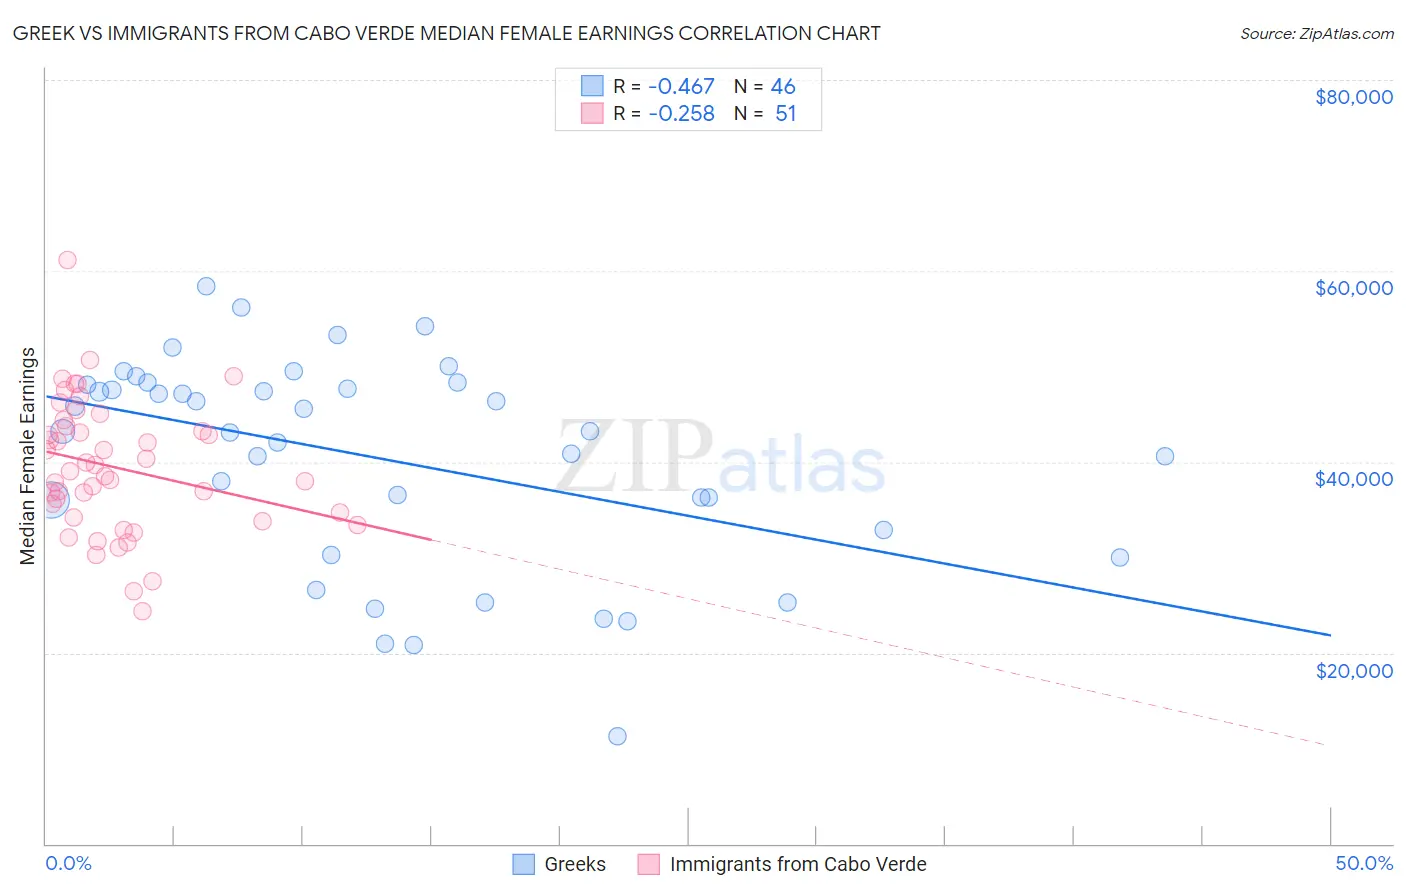 Greek vs Immigrants from Cabo Verde Median Female Earnings